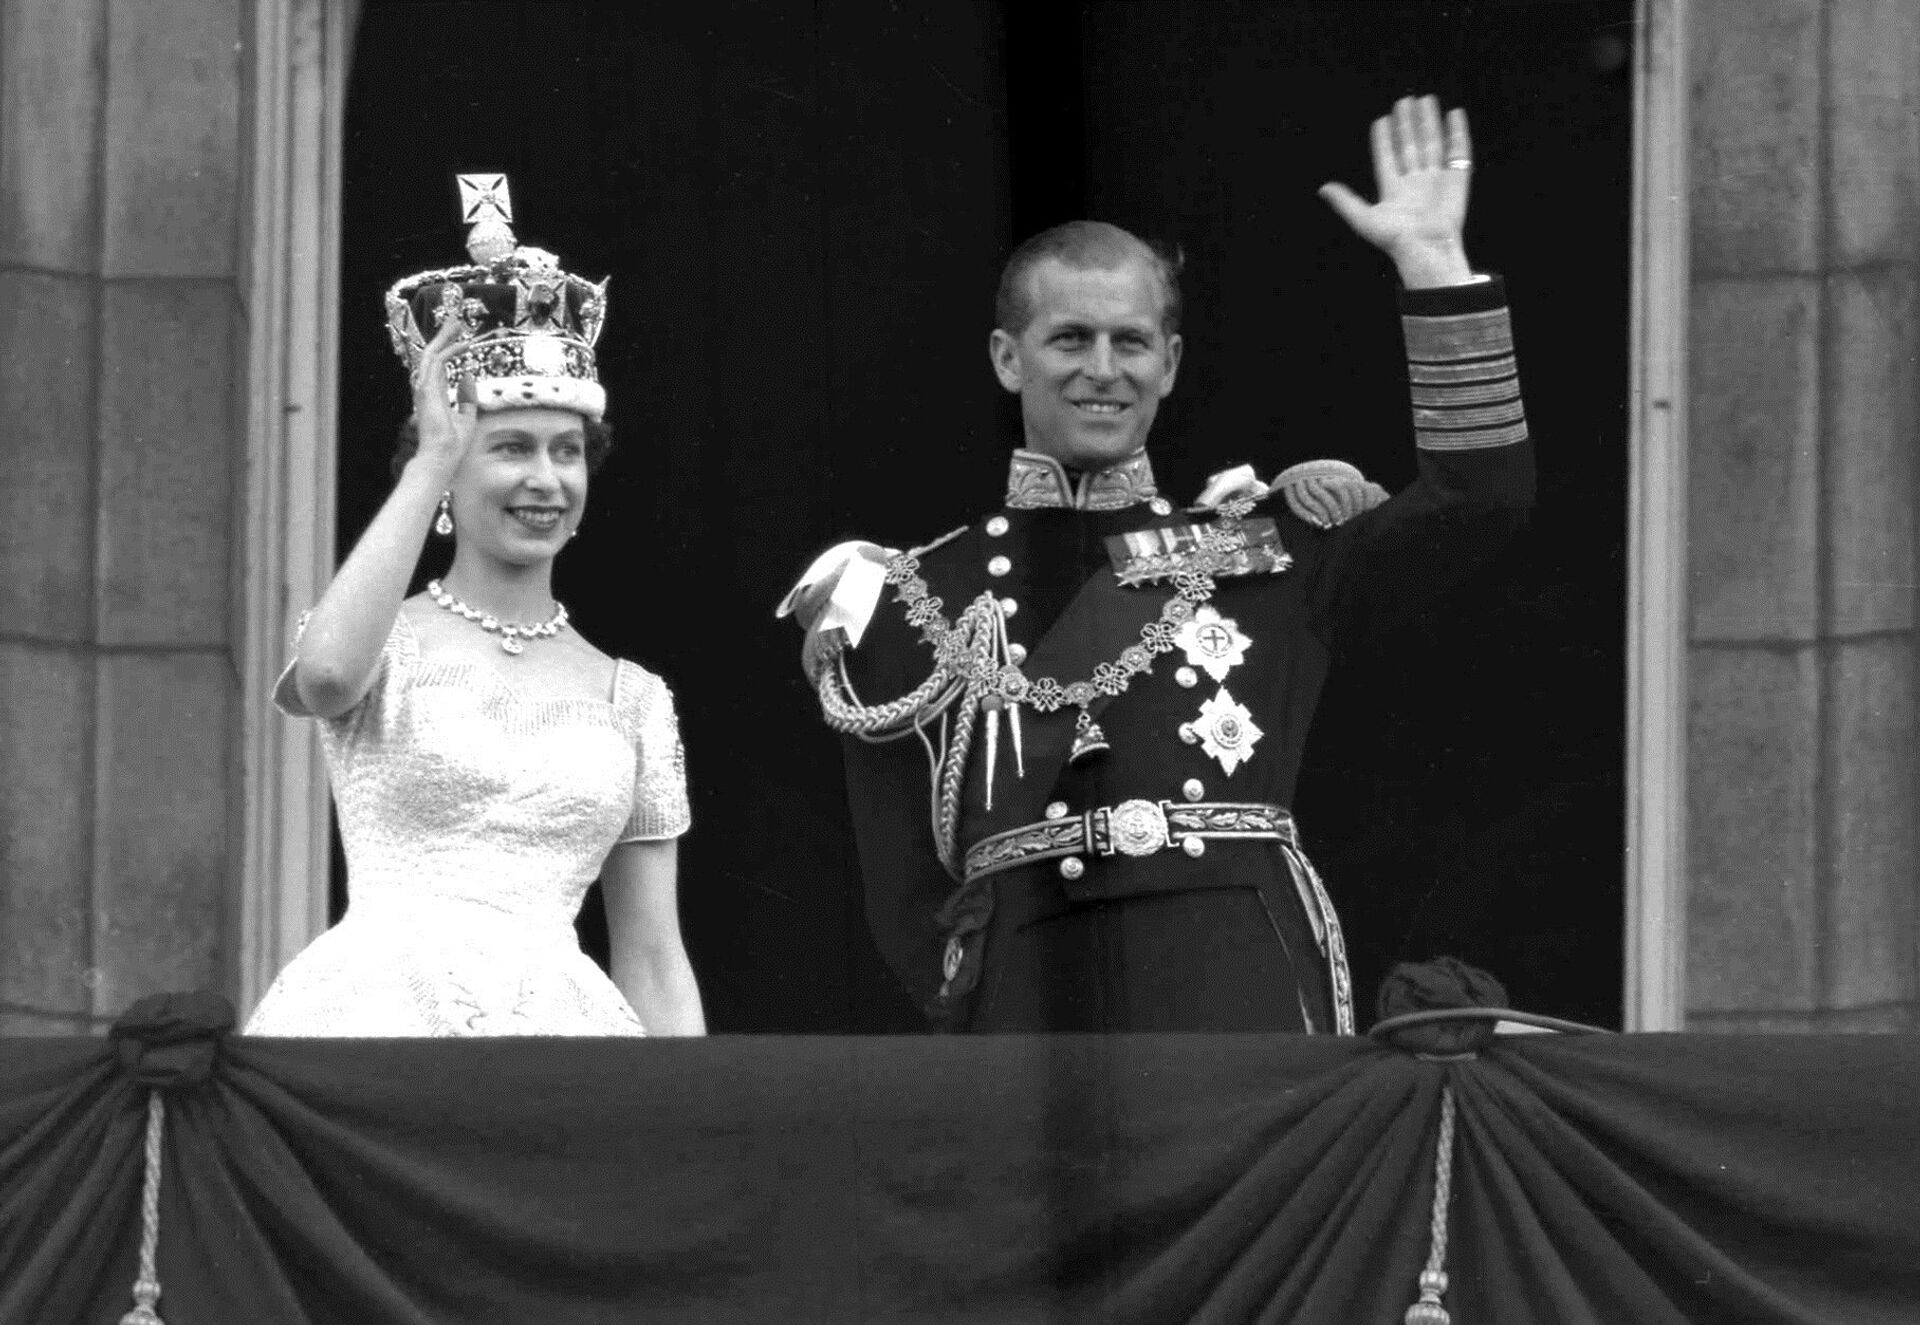 Queen Elizabeth II Kept Photo of Herself and Prince Philip in Handbag During Funeral, Reports Say - Sputnik International, 1920, 18.04.2021